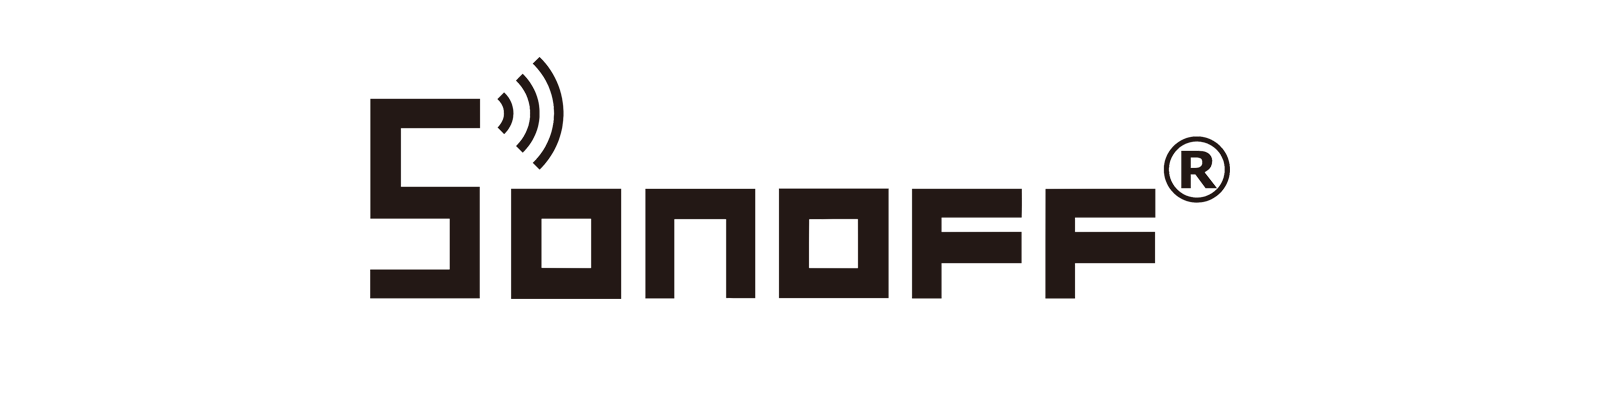 www-mediarath-de-smarthome-tasmota-sonoff-logo